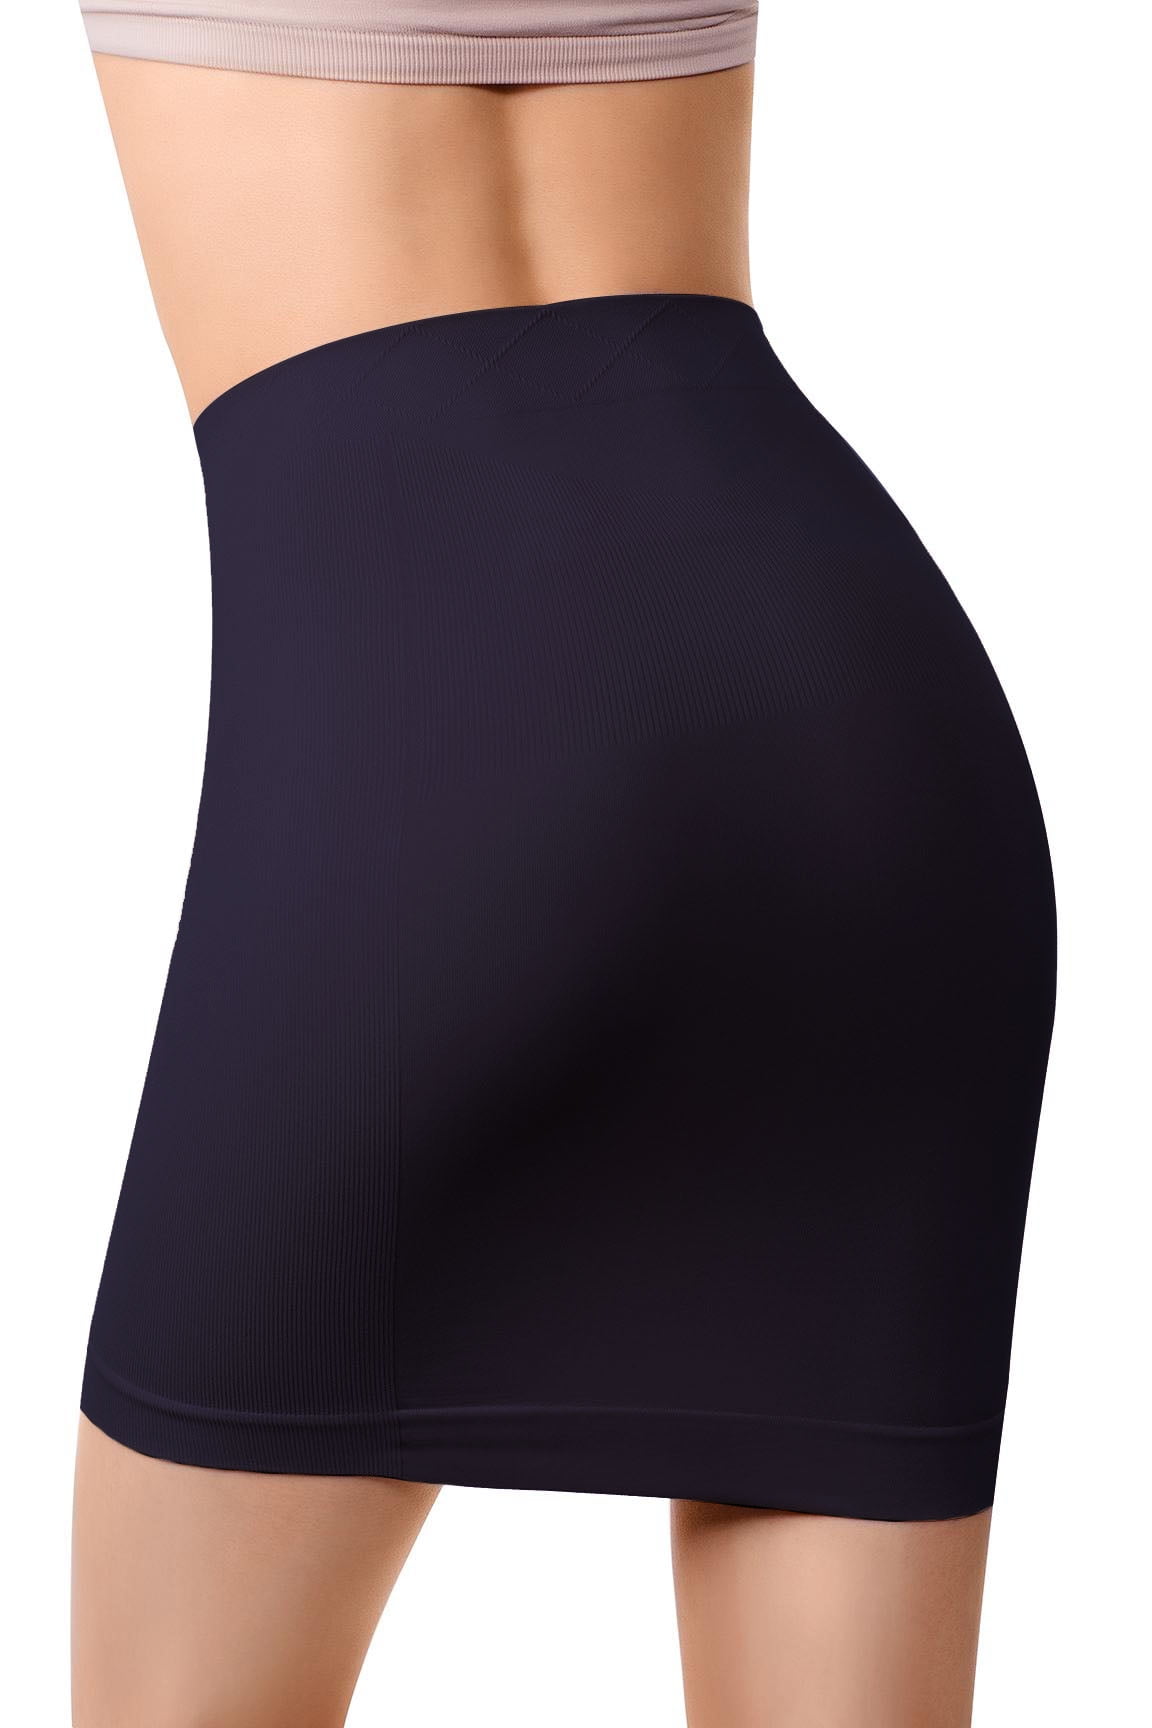 MD Women's Shapewear High Waisted Nylon Firm Tummy Control Half Slip Body  Shaper Black XXLarge 